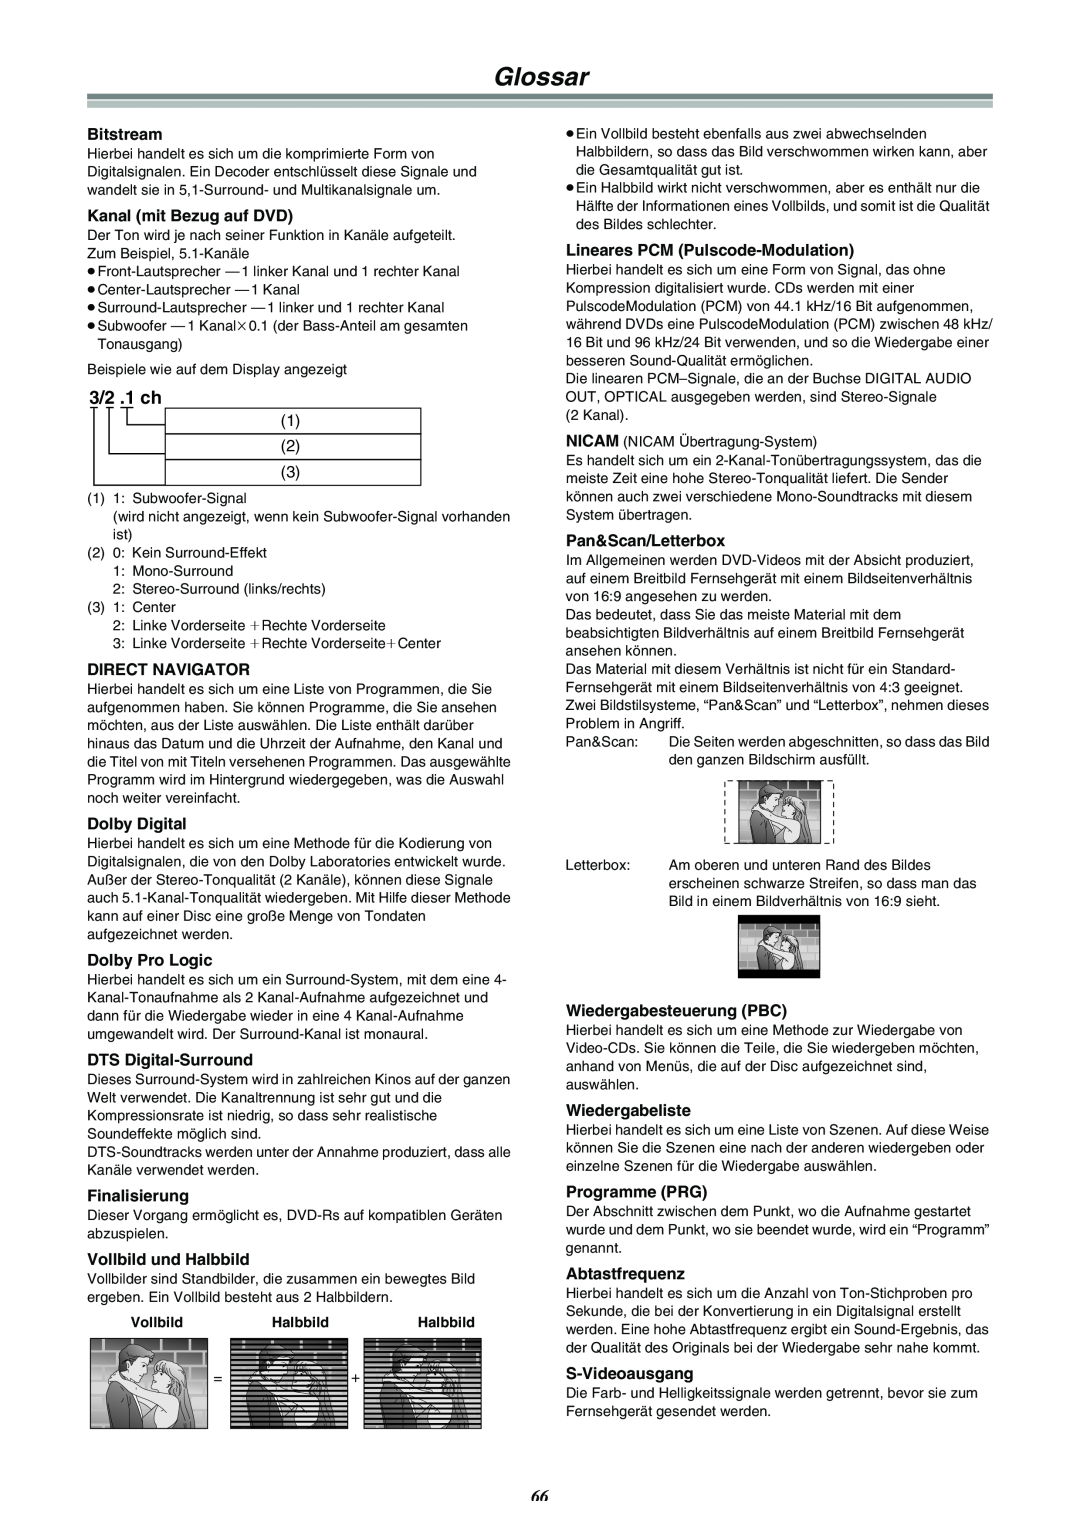 Panasonic DMR-E30 manual Glossar, 3/2 .1 ch 